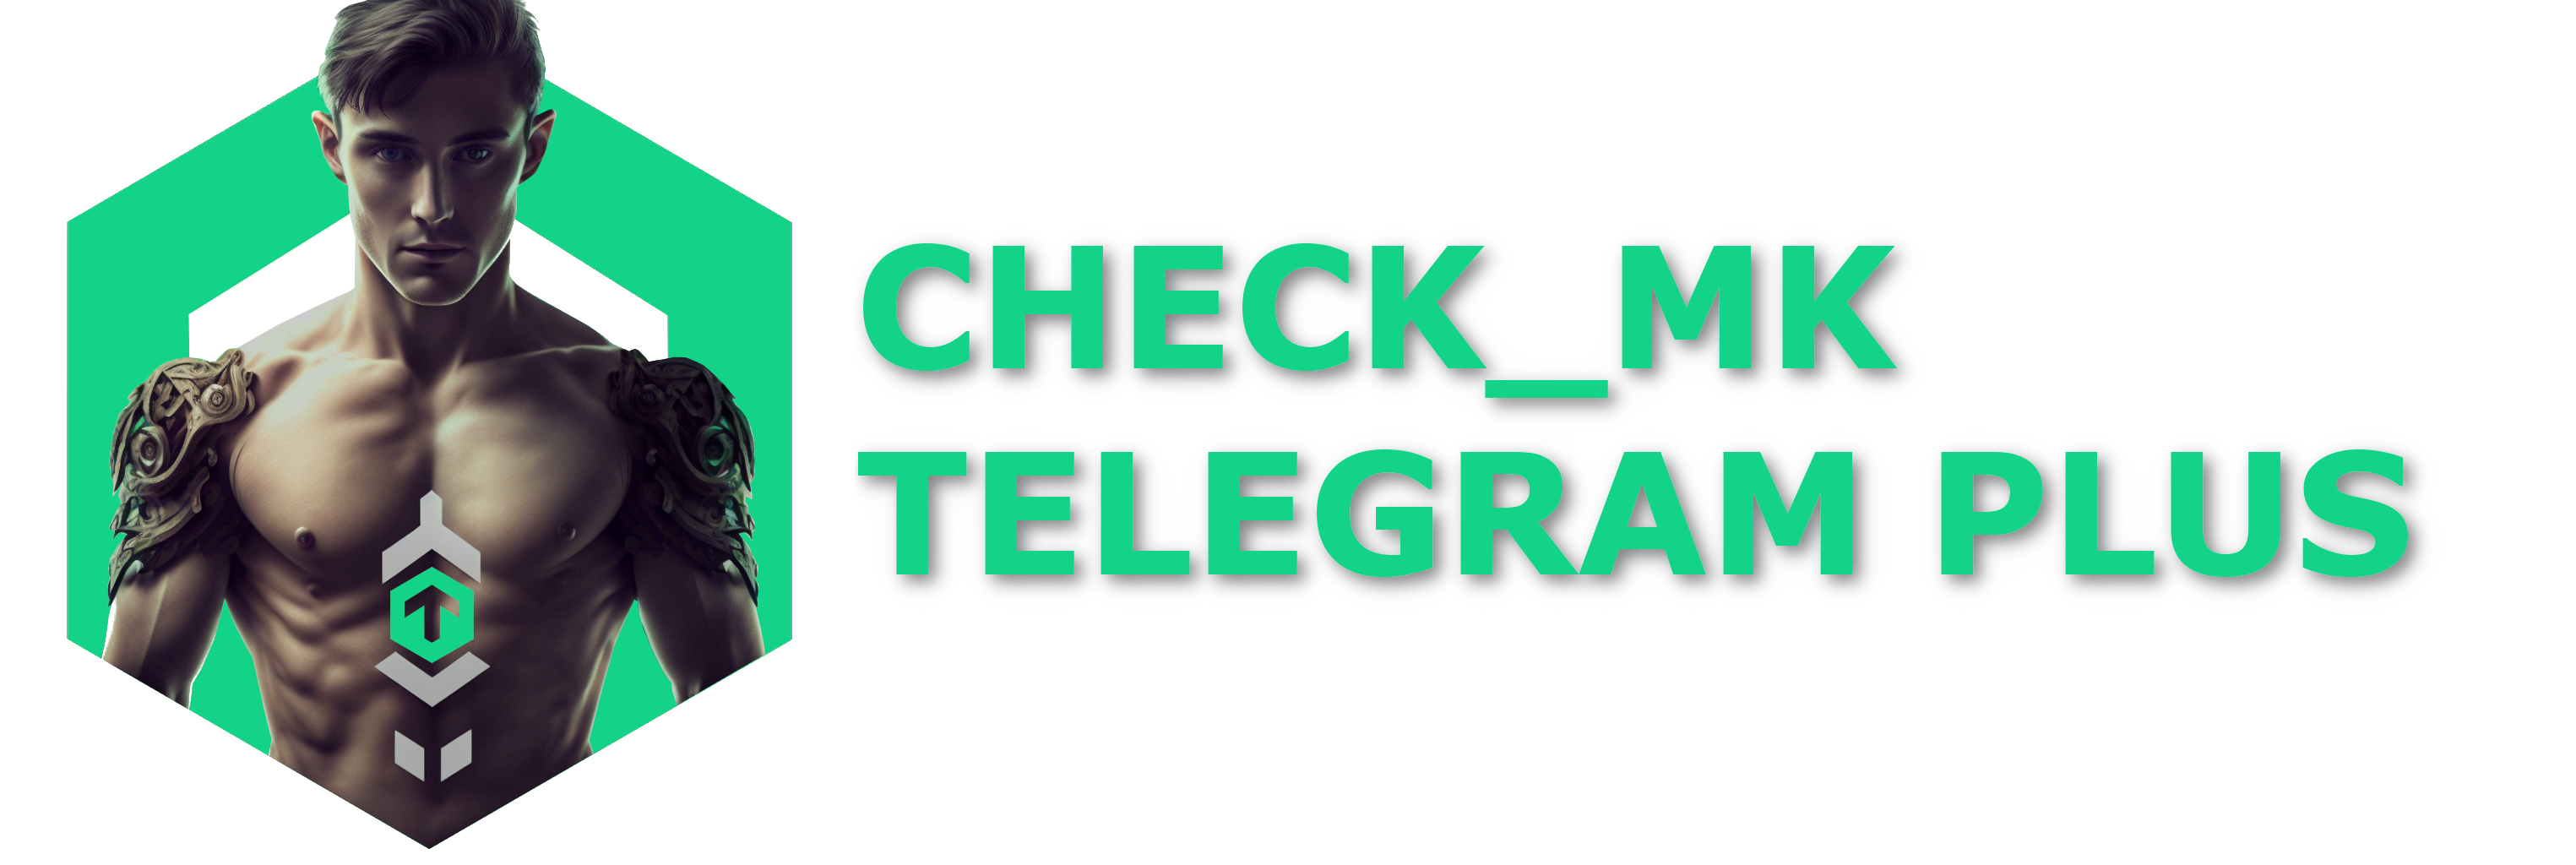 checkmk-telegram-bot-banner.png